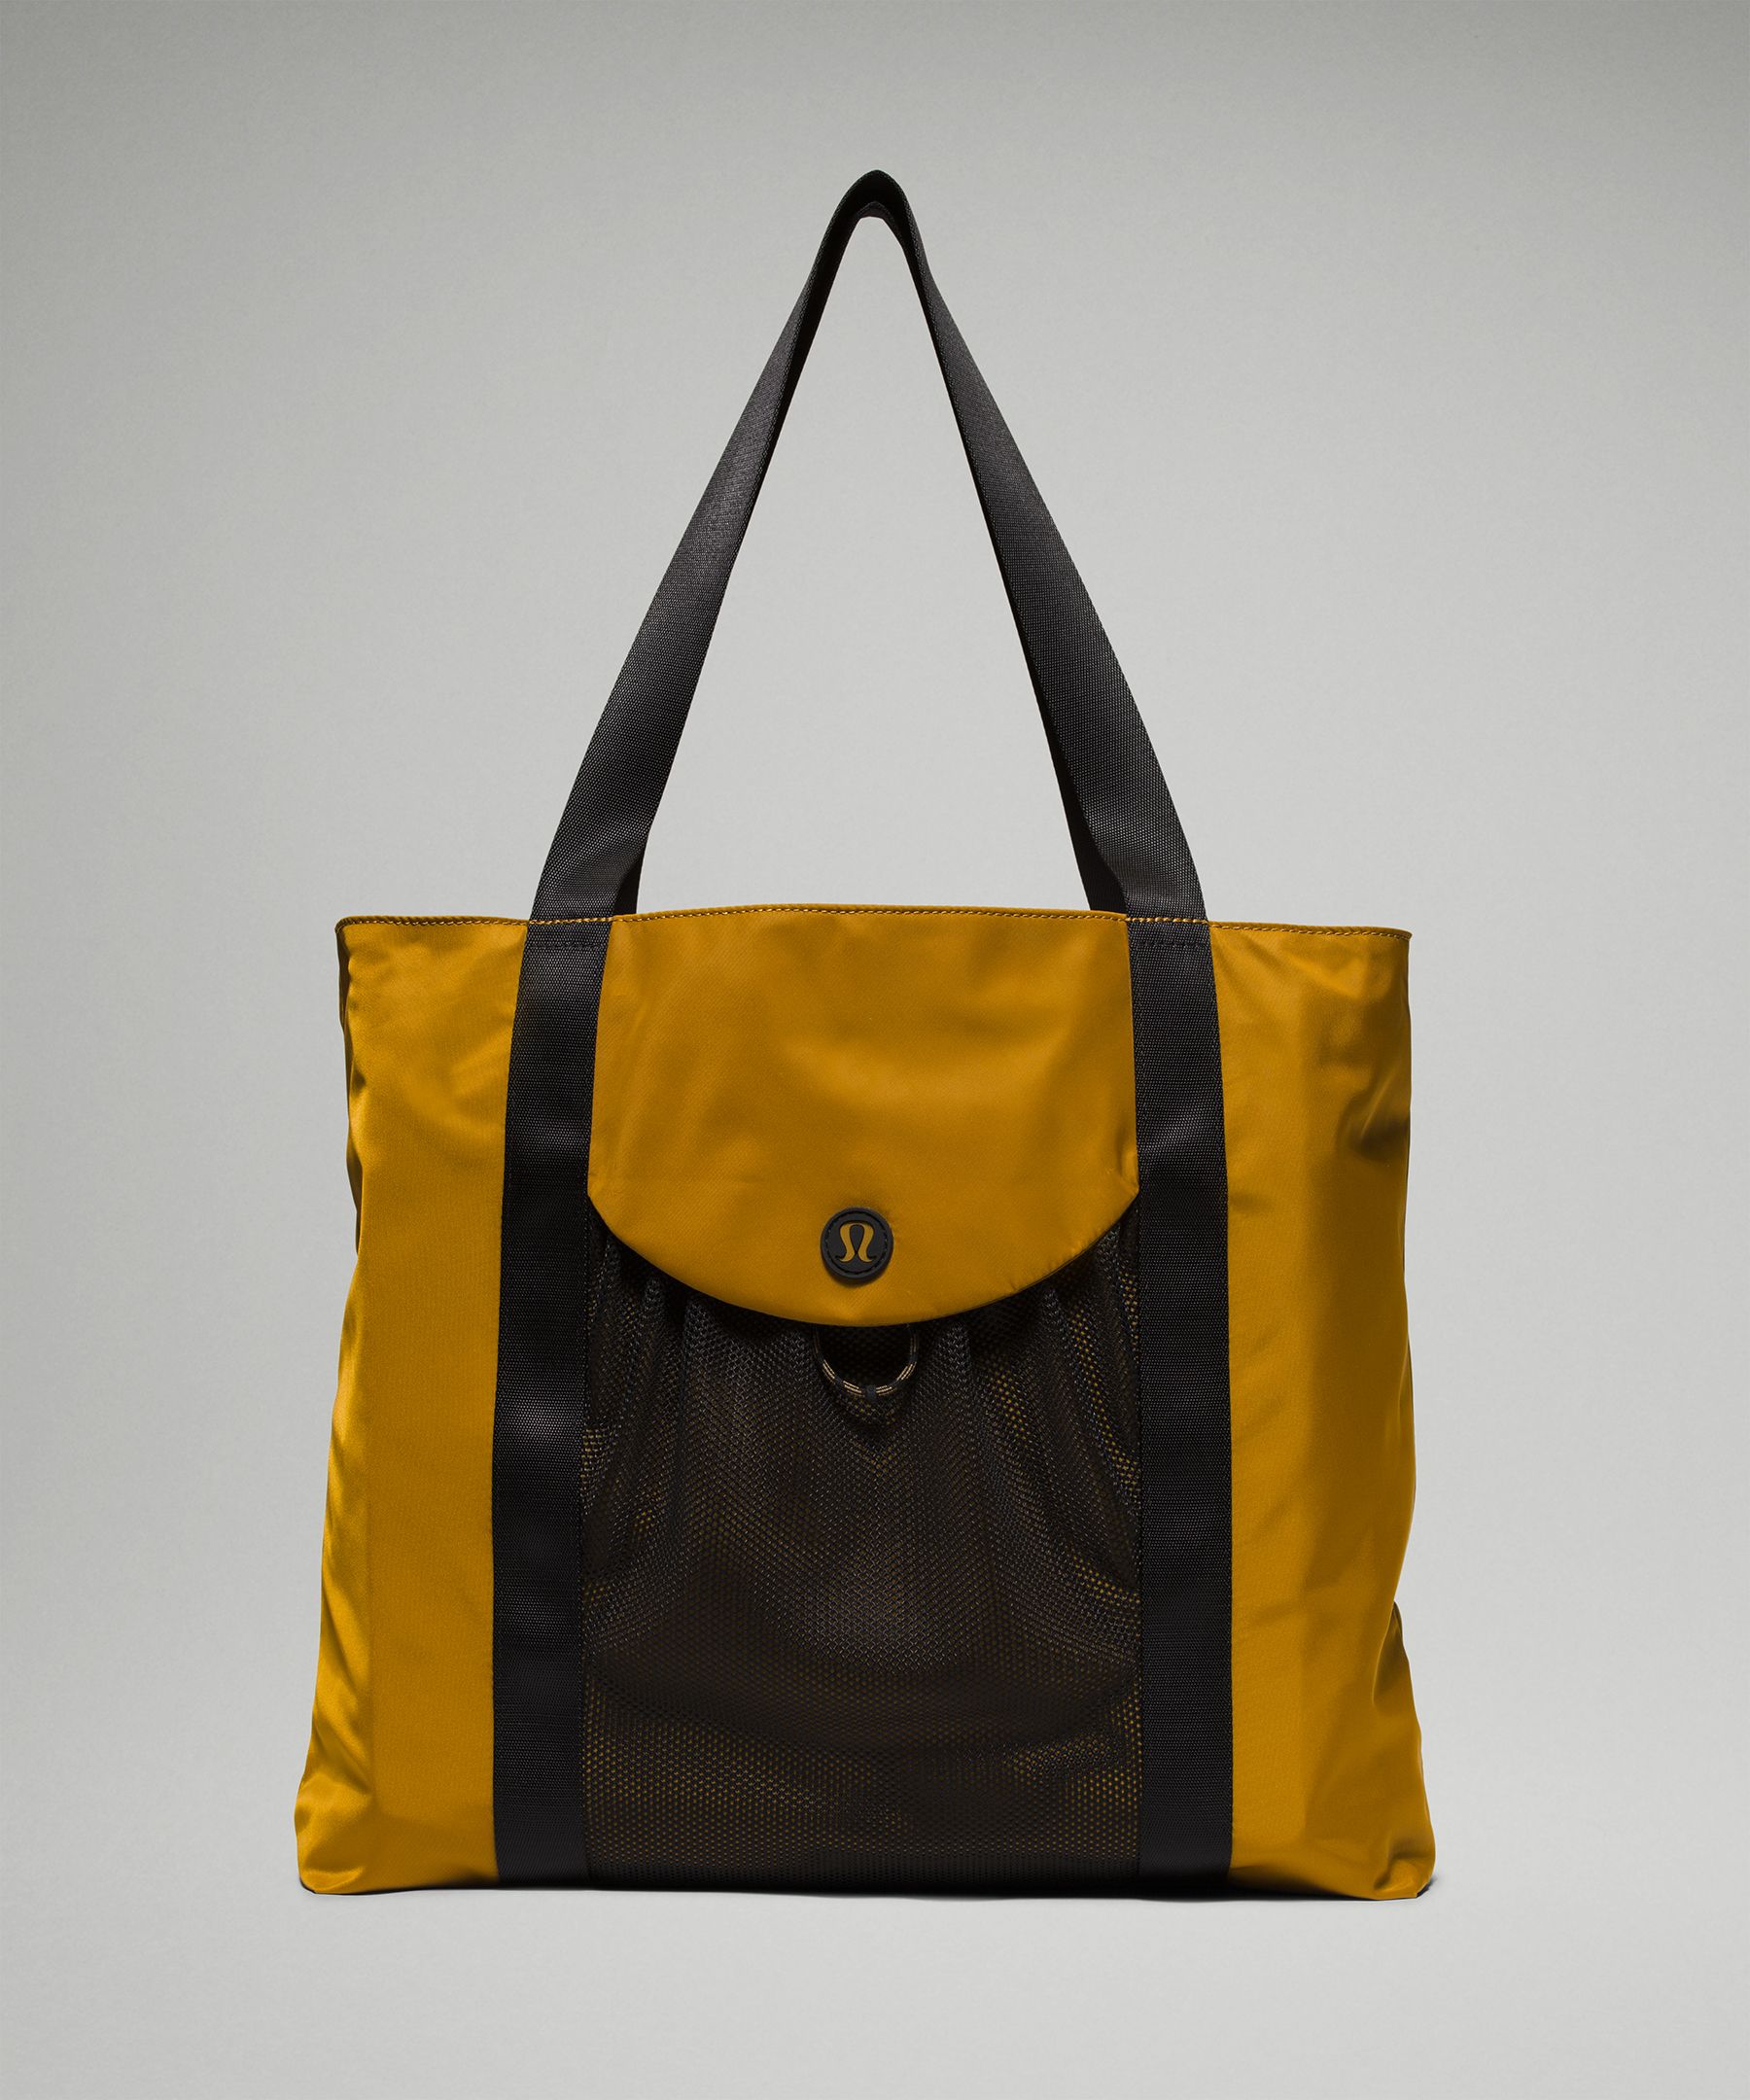 Lululemon Take It On Tote Bag 24l In Gold Spice/black